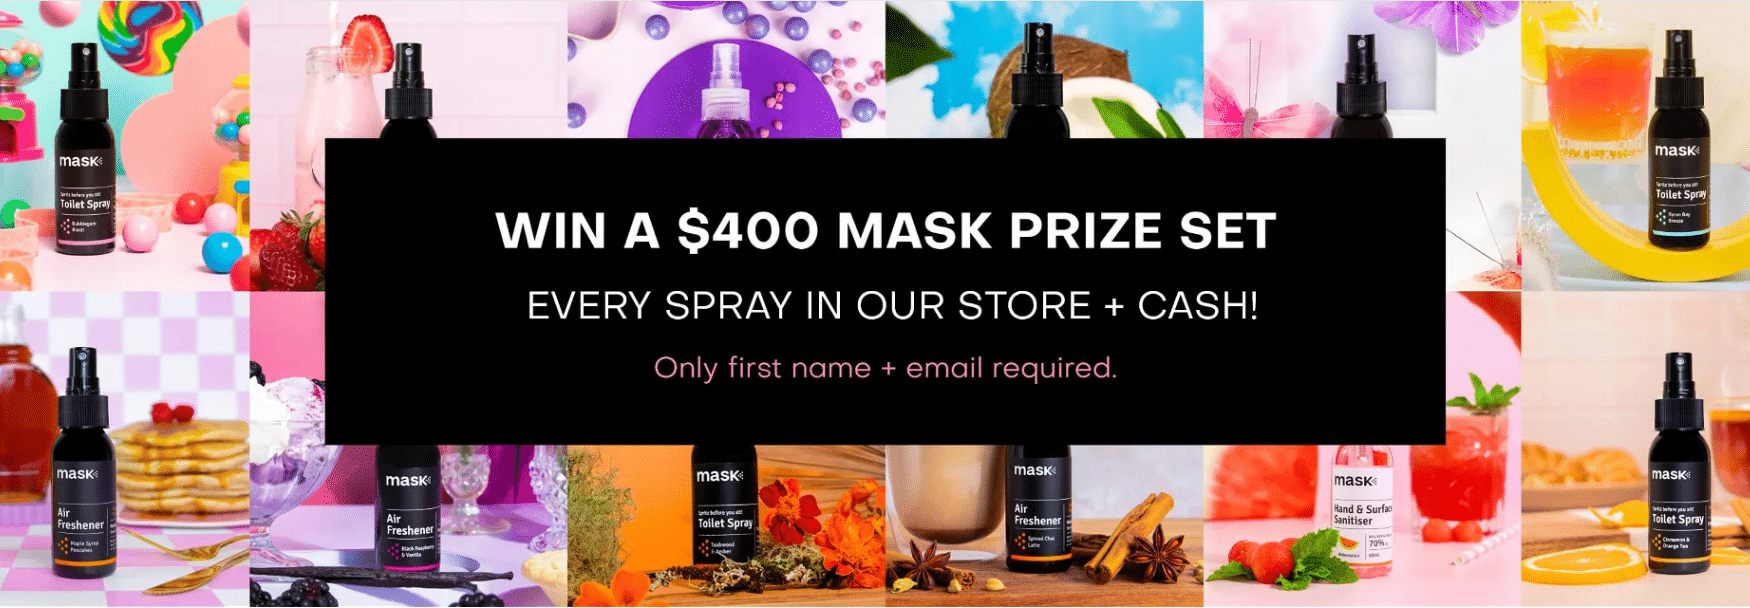 Win a $400 Mask Prize Set